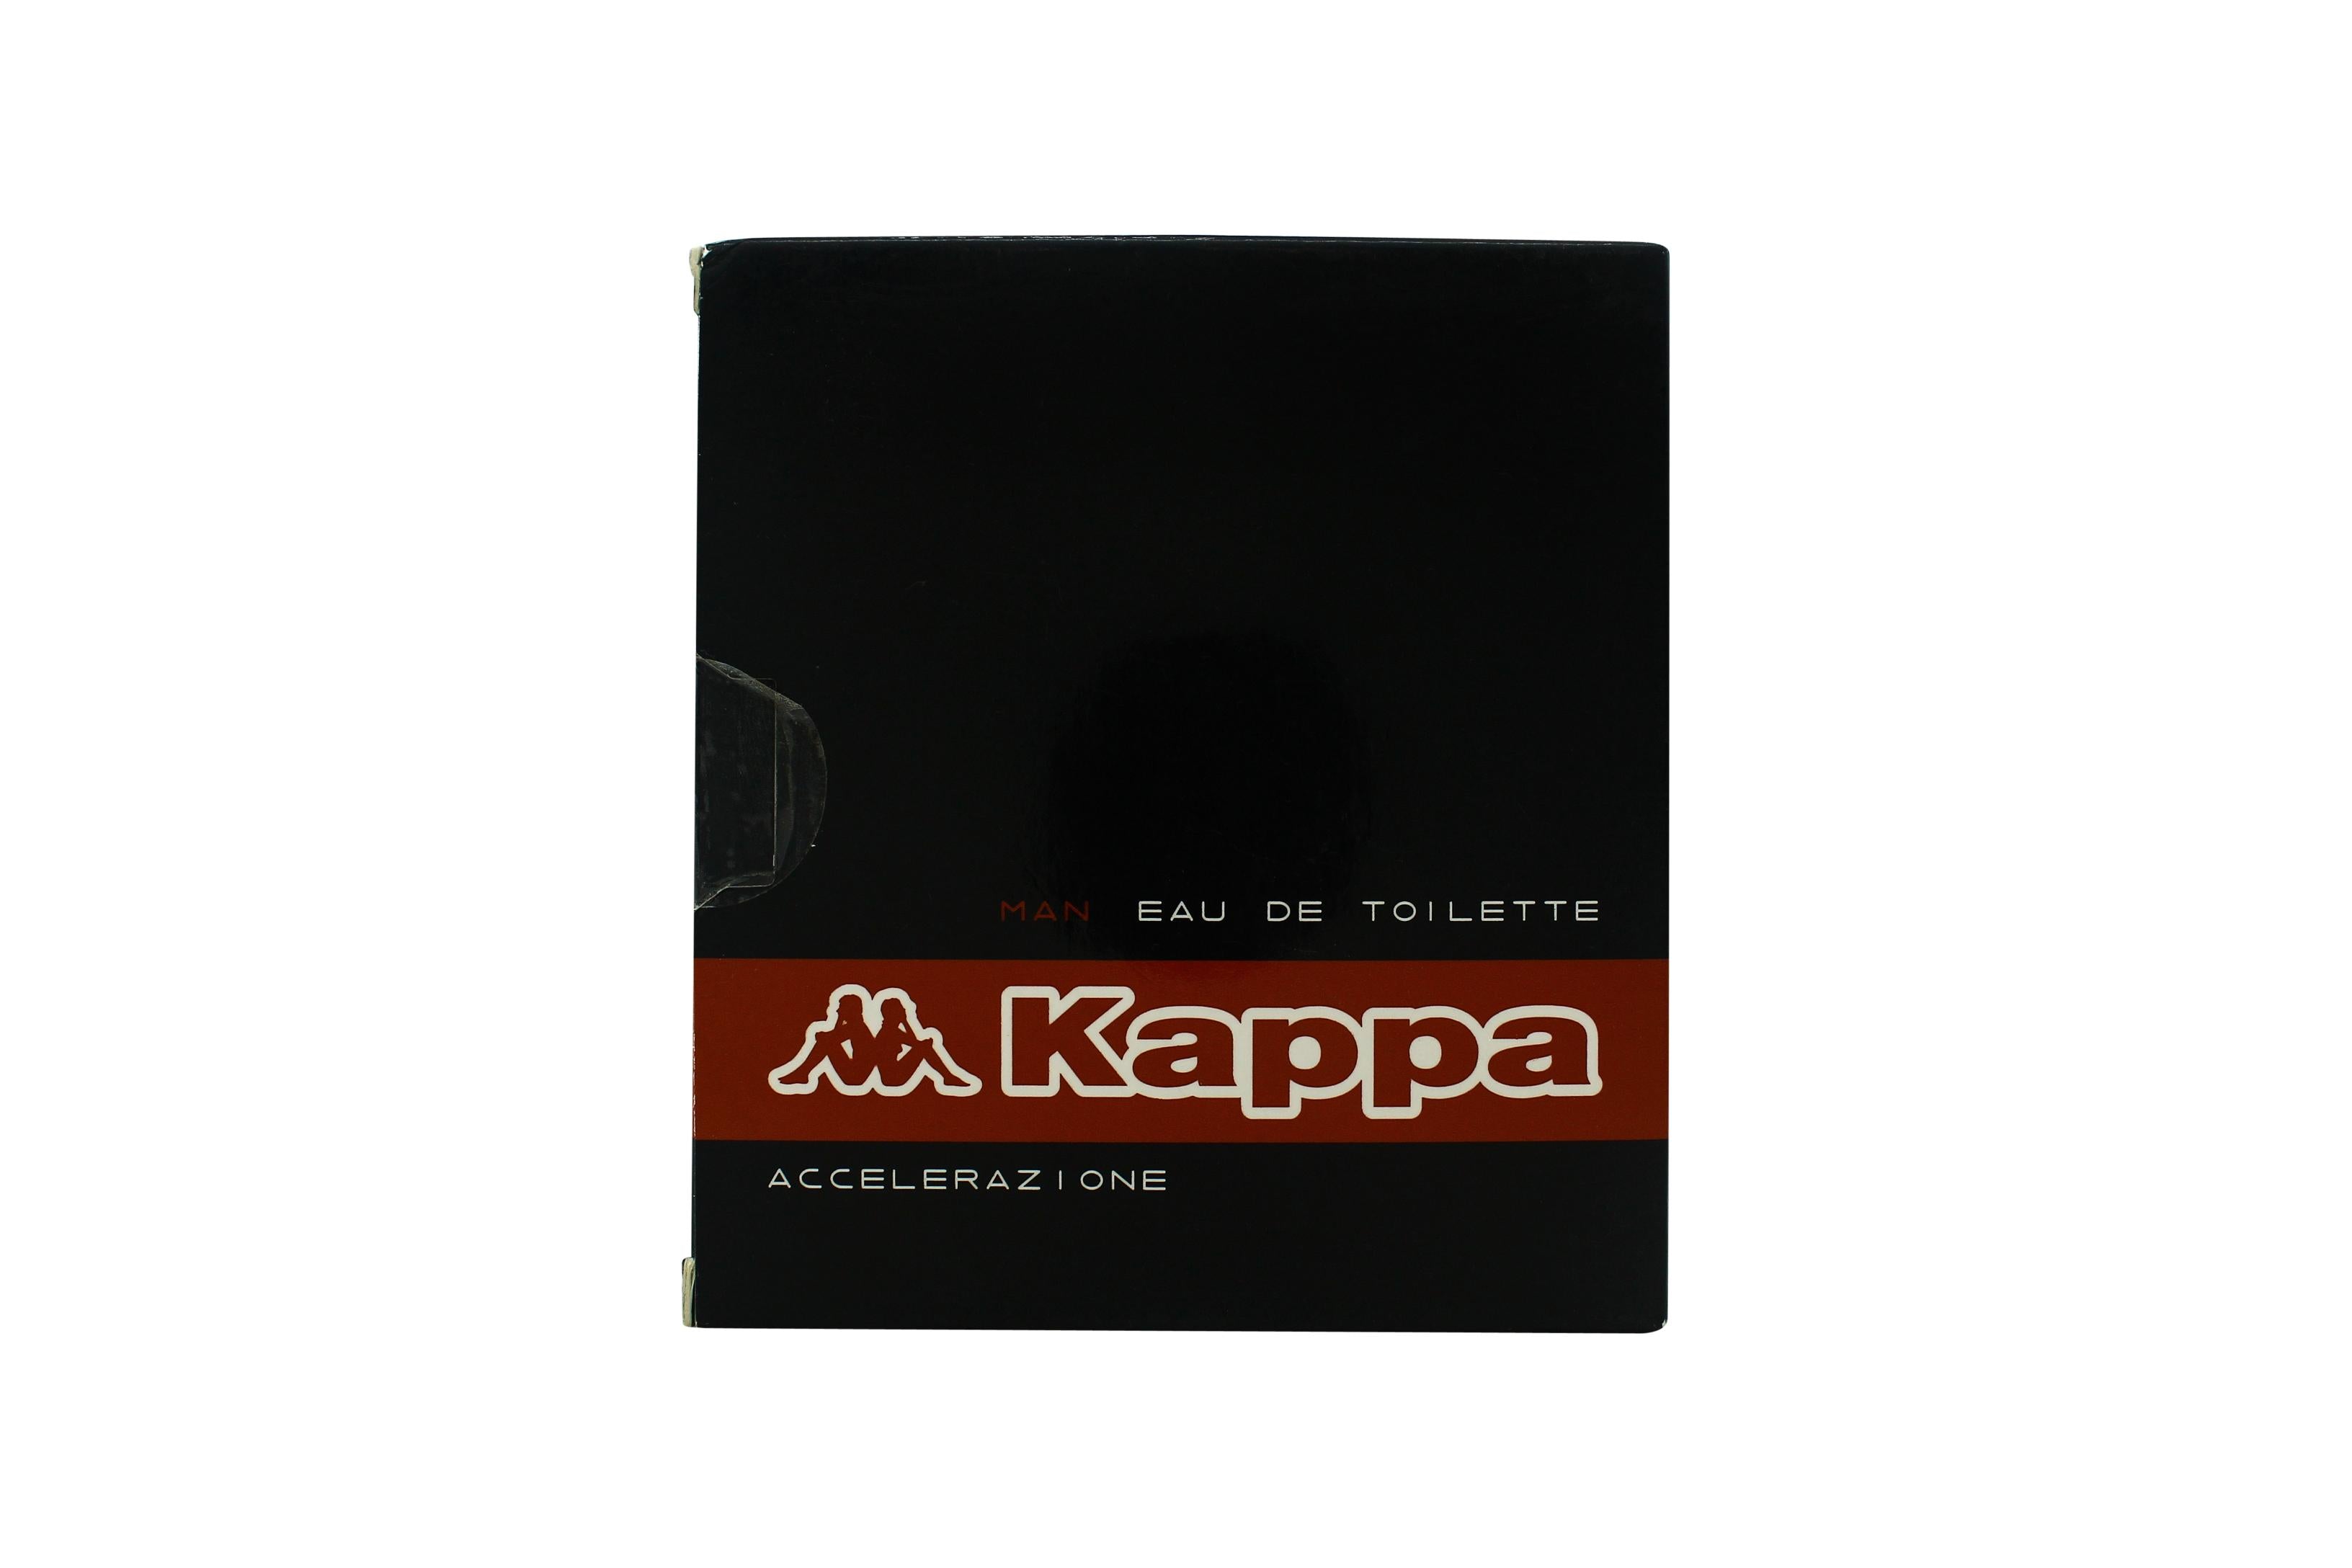 View Kappa Accelerazione Eau de Toilette 100ml Spray information